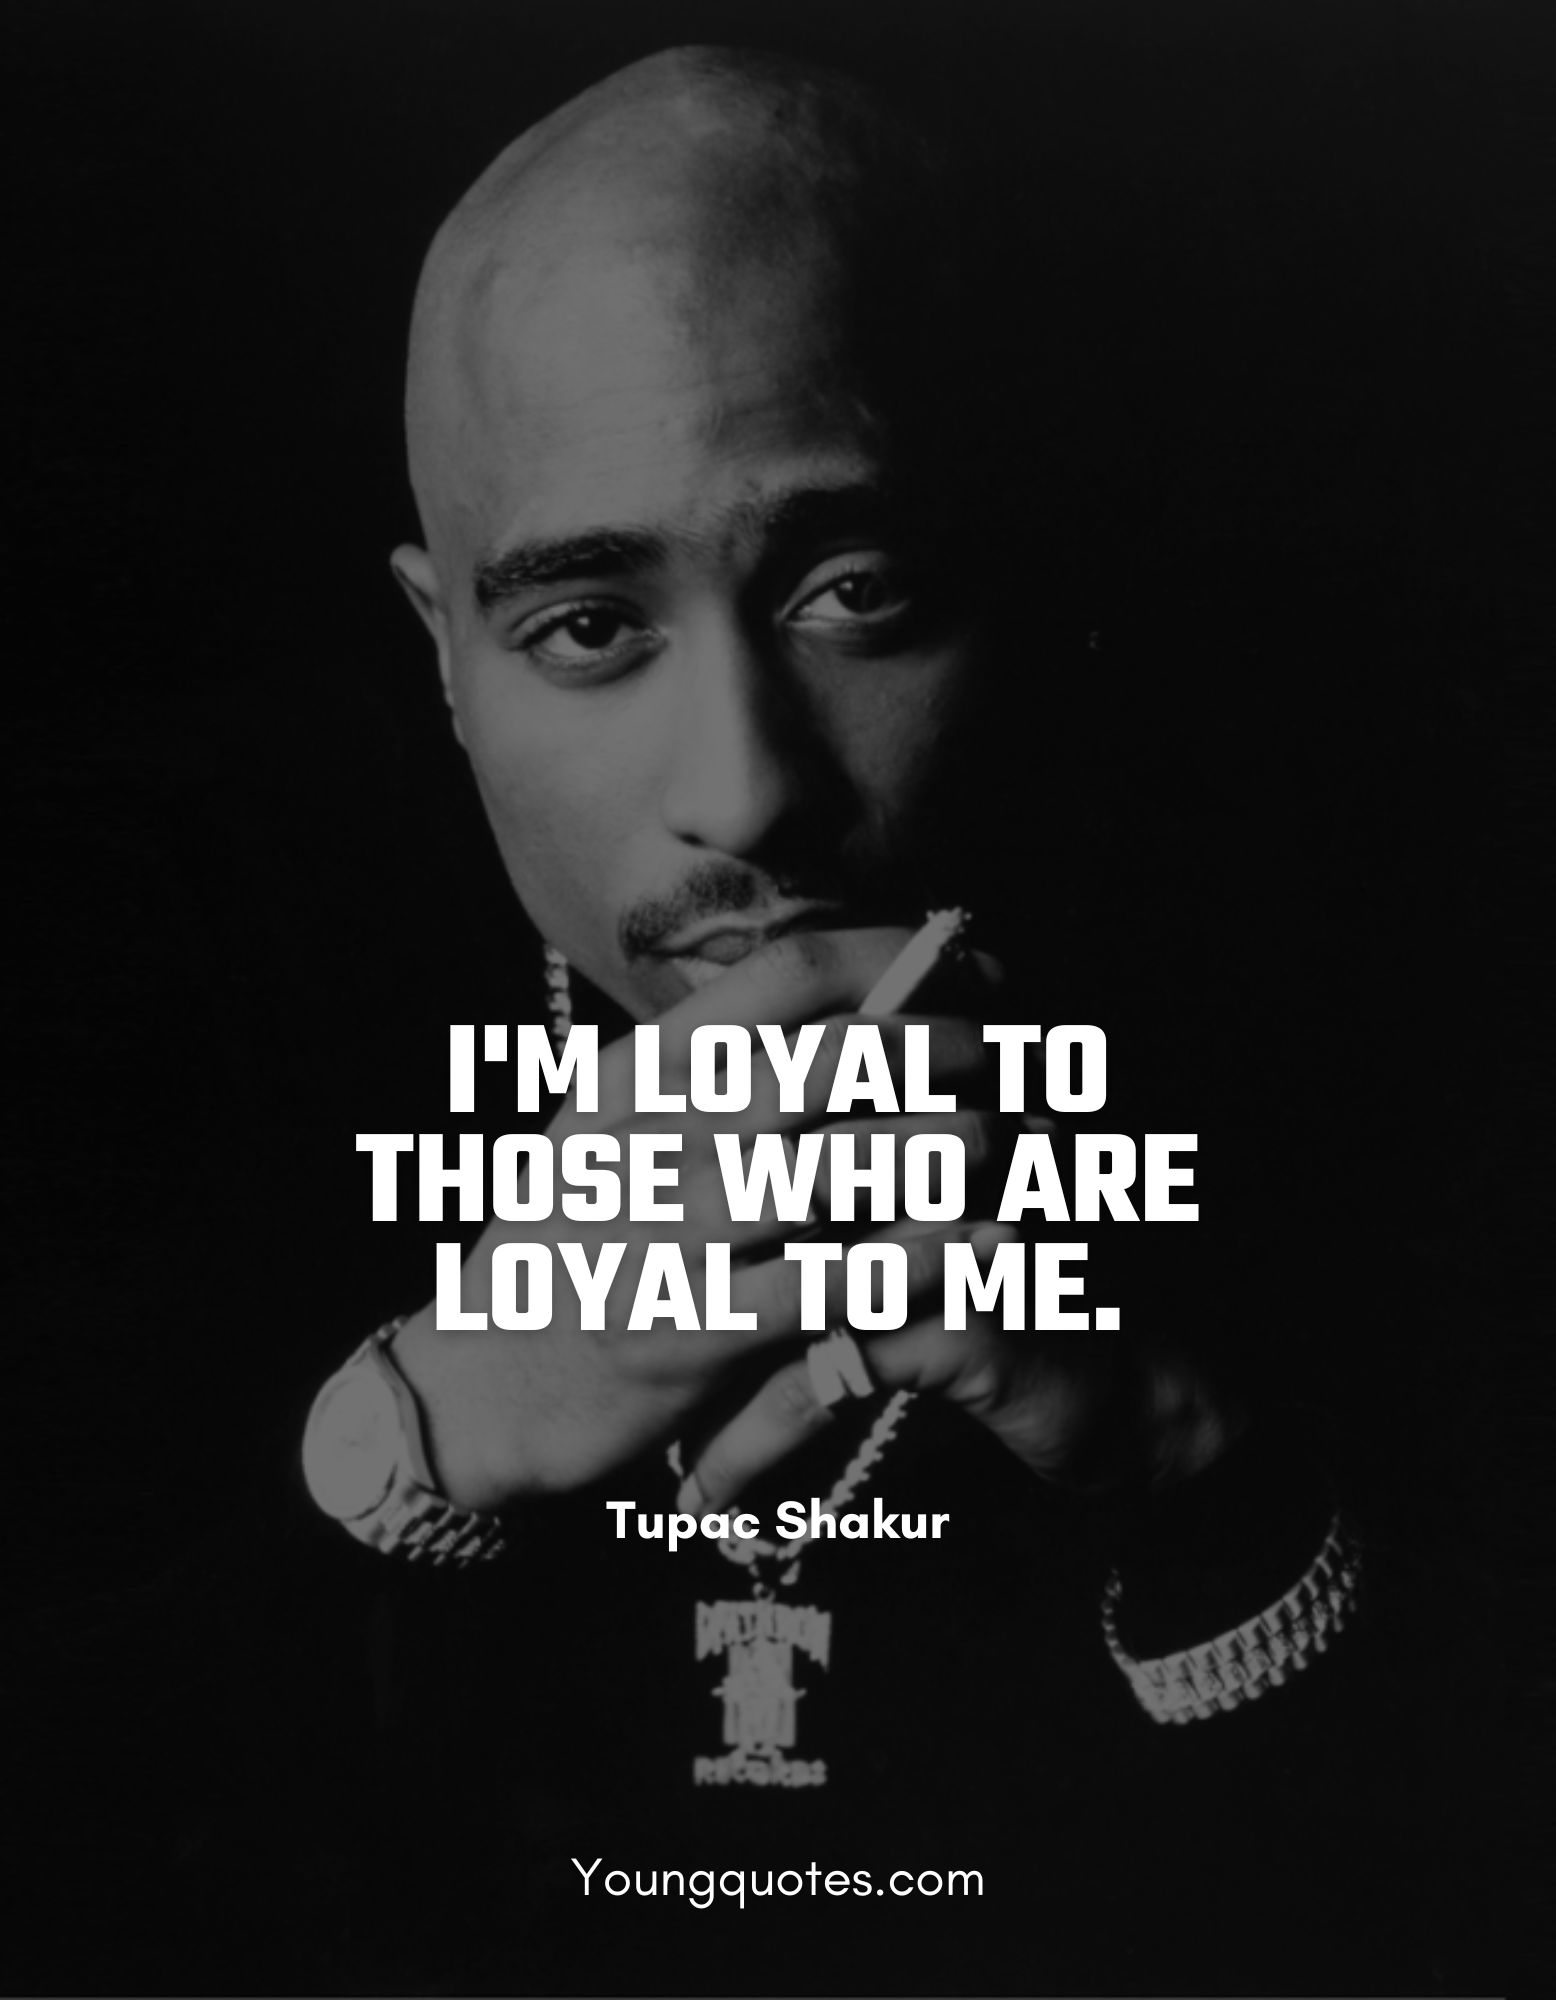 tupac shakur quotes on loyality - I'm loyal to those who are loyal to me.